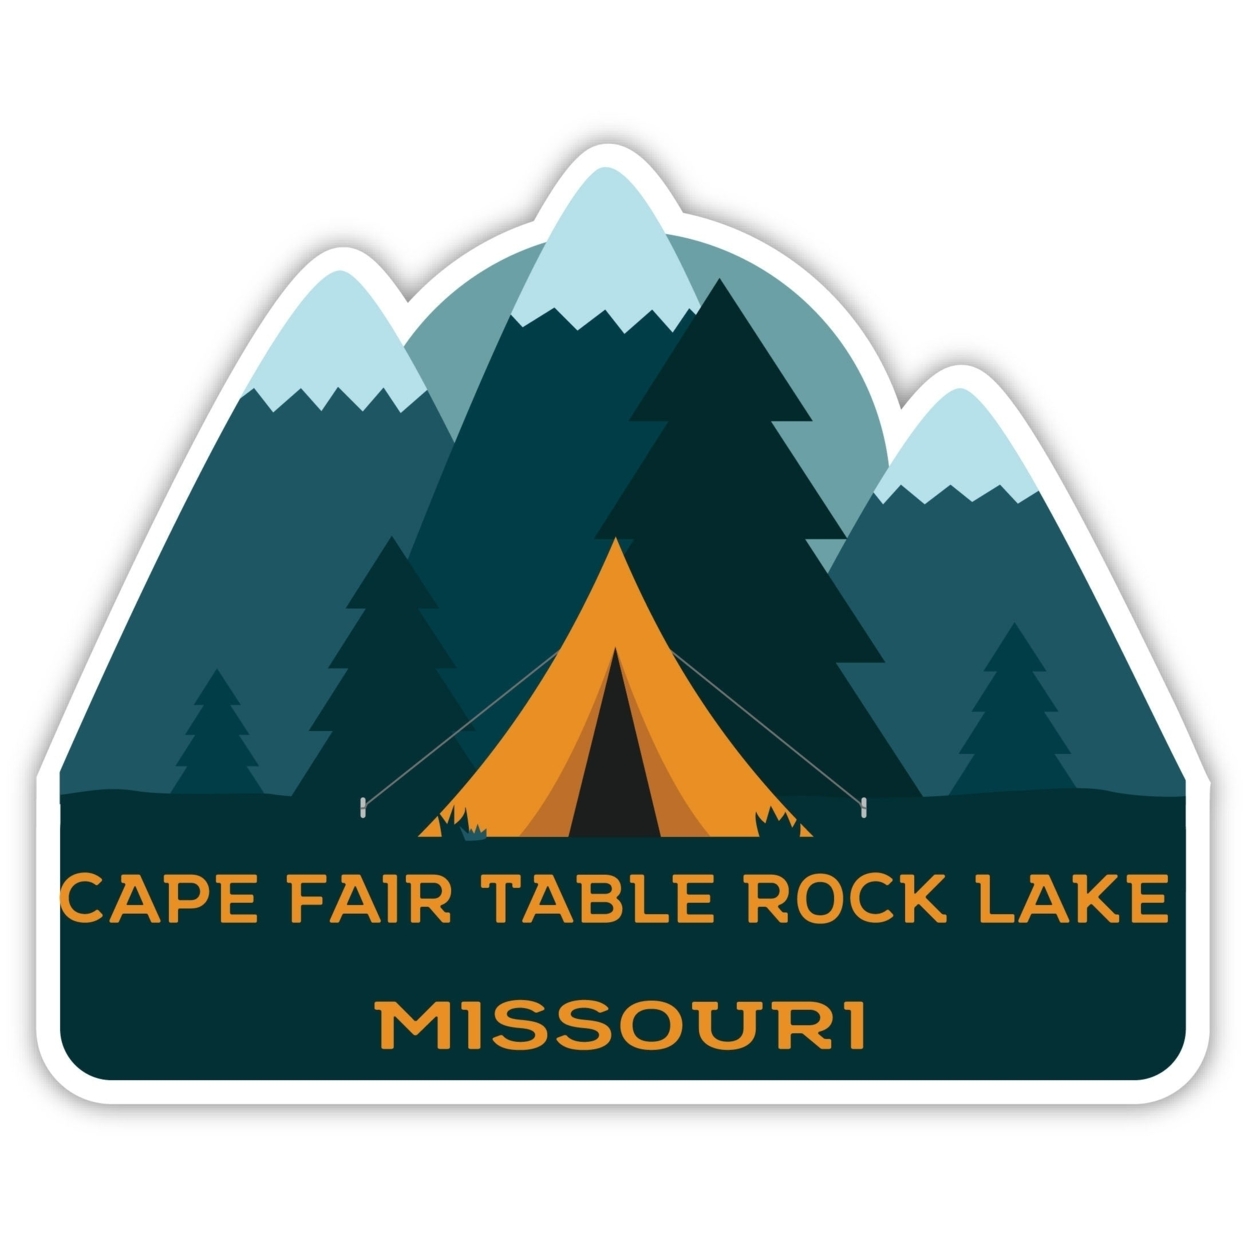 Cape Fair Table Rock Lake Missouri Souvenir Decorative Stickers (Choose Theme And Size) - 4-Pack, 6-Inch, Tent